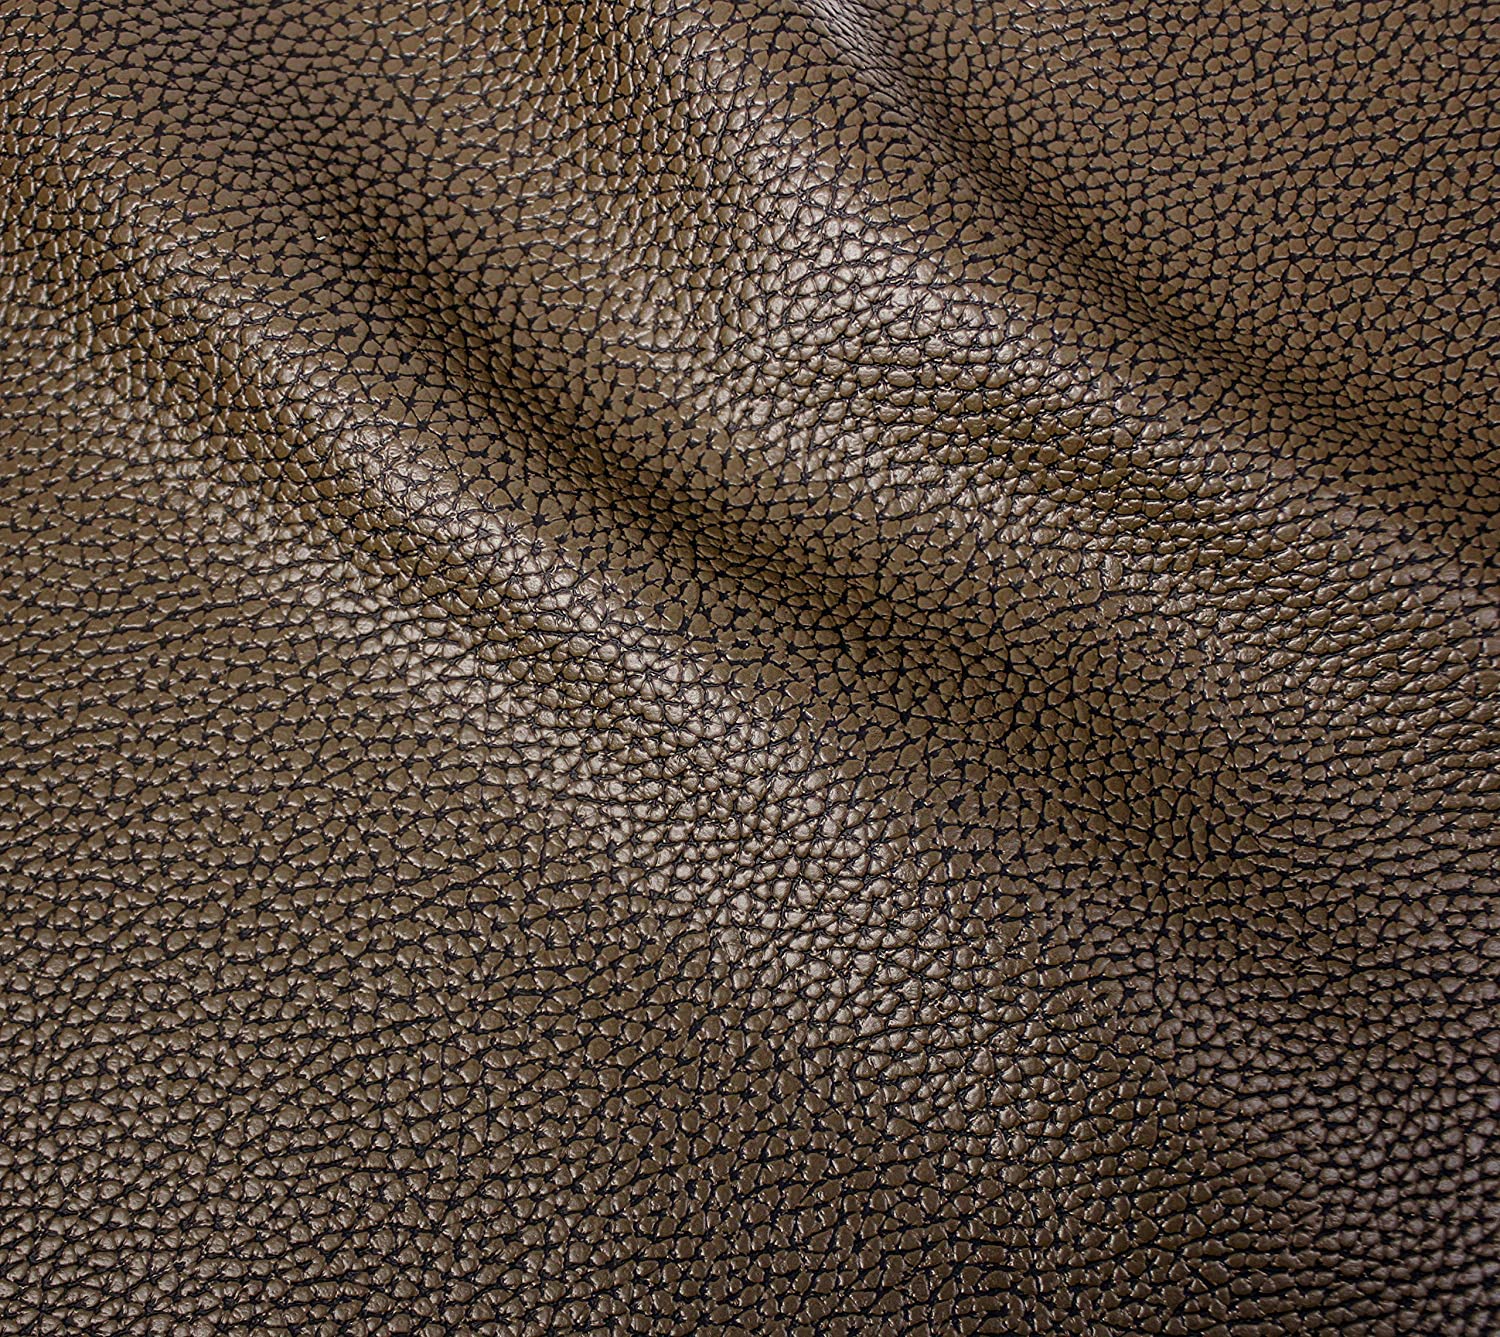 vinyl fabric texture